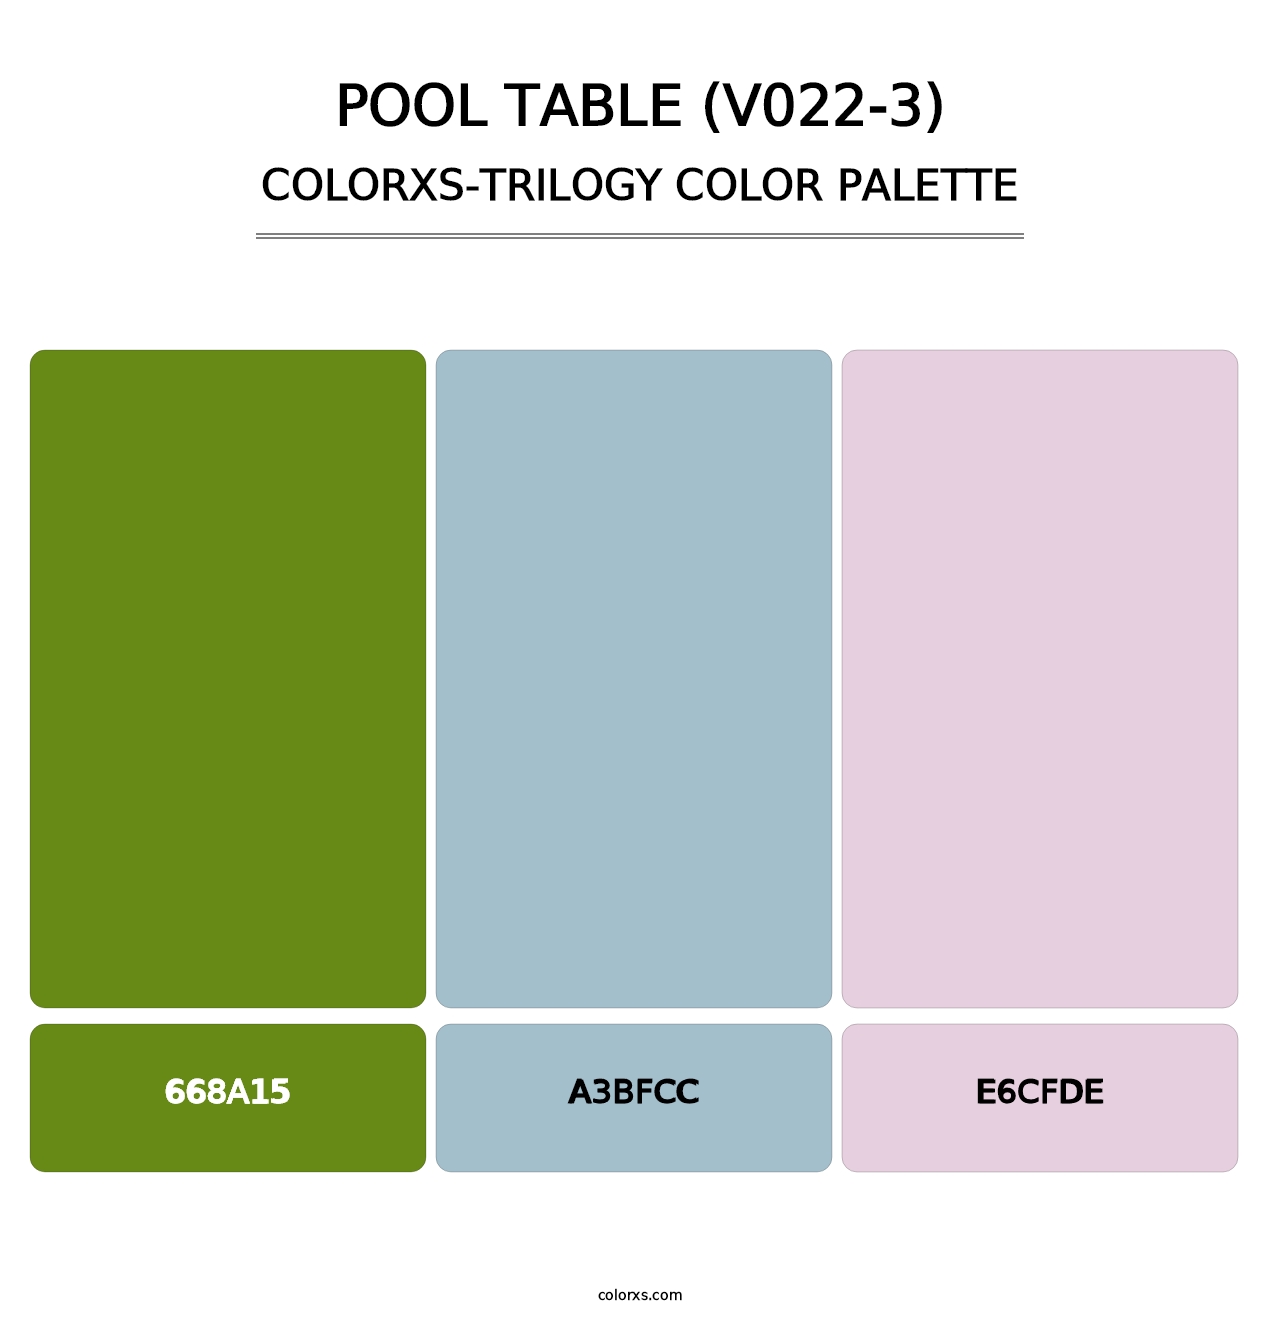 Pool Table (V022-3) - Colorxs Trilogy Palette